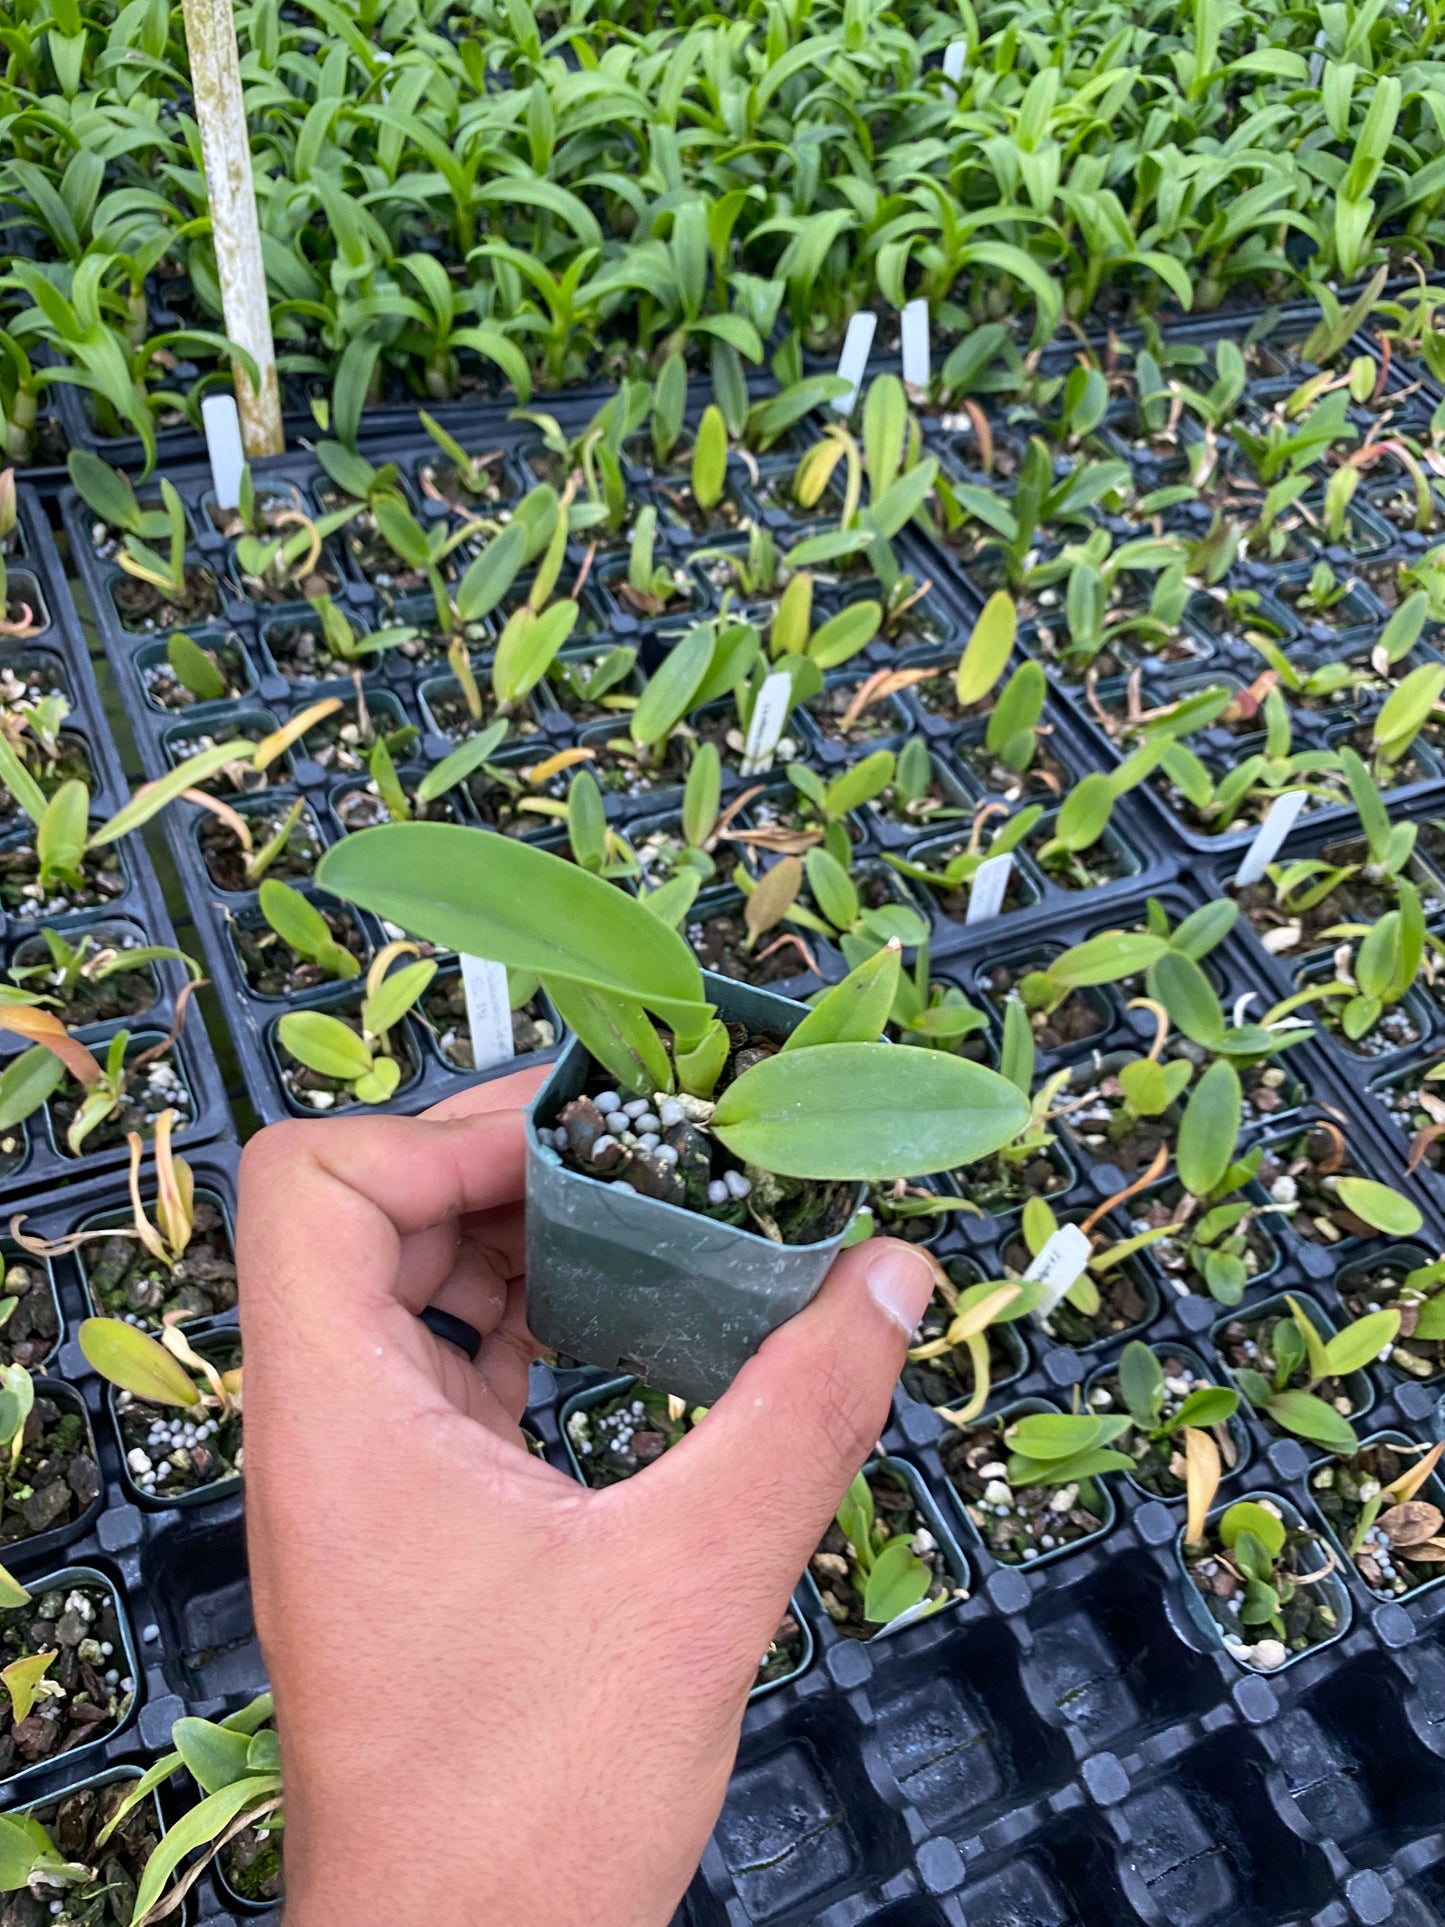 Cattleya Orchid Rlc Star Of Siam Fragrant Cattleyas comes in 2" Pot